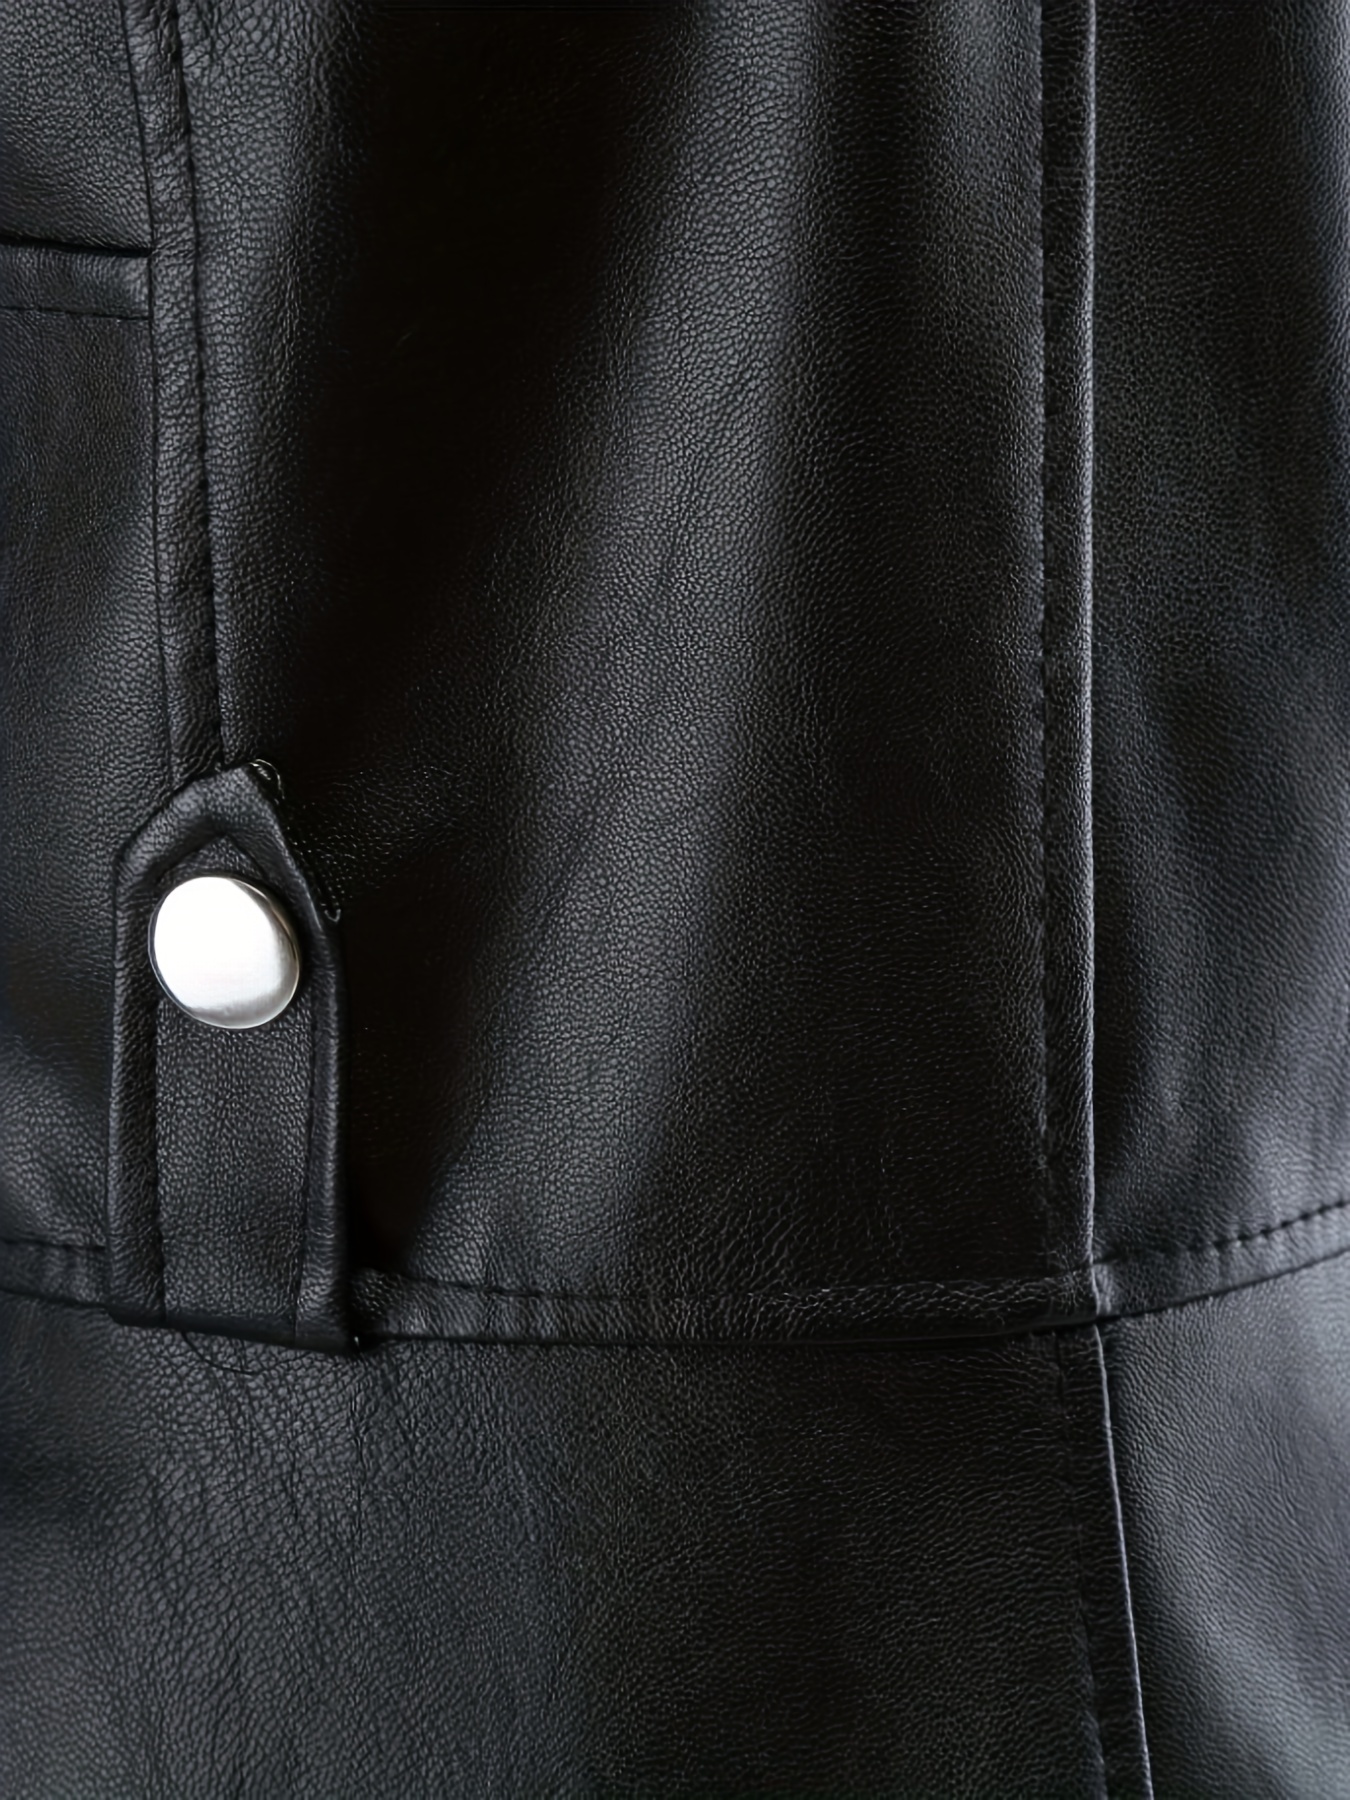 Women's Pleather Jacket - Zip Front Closure / Long Sleeves / Black